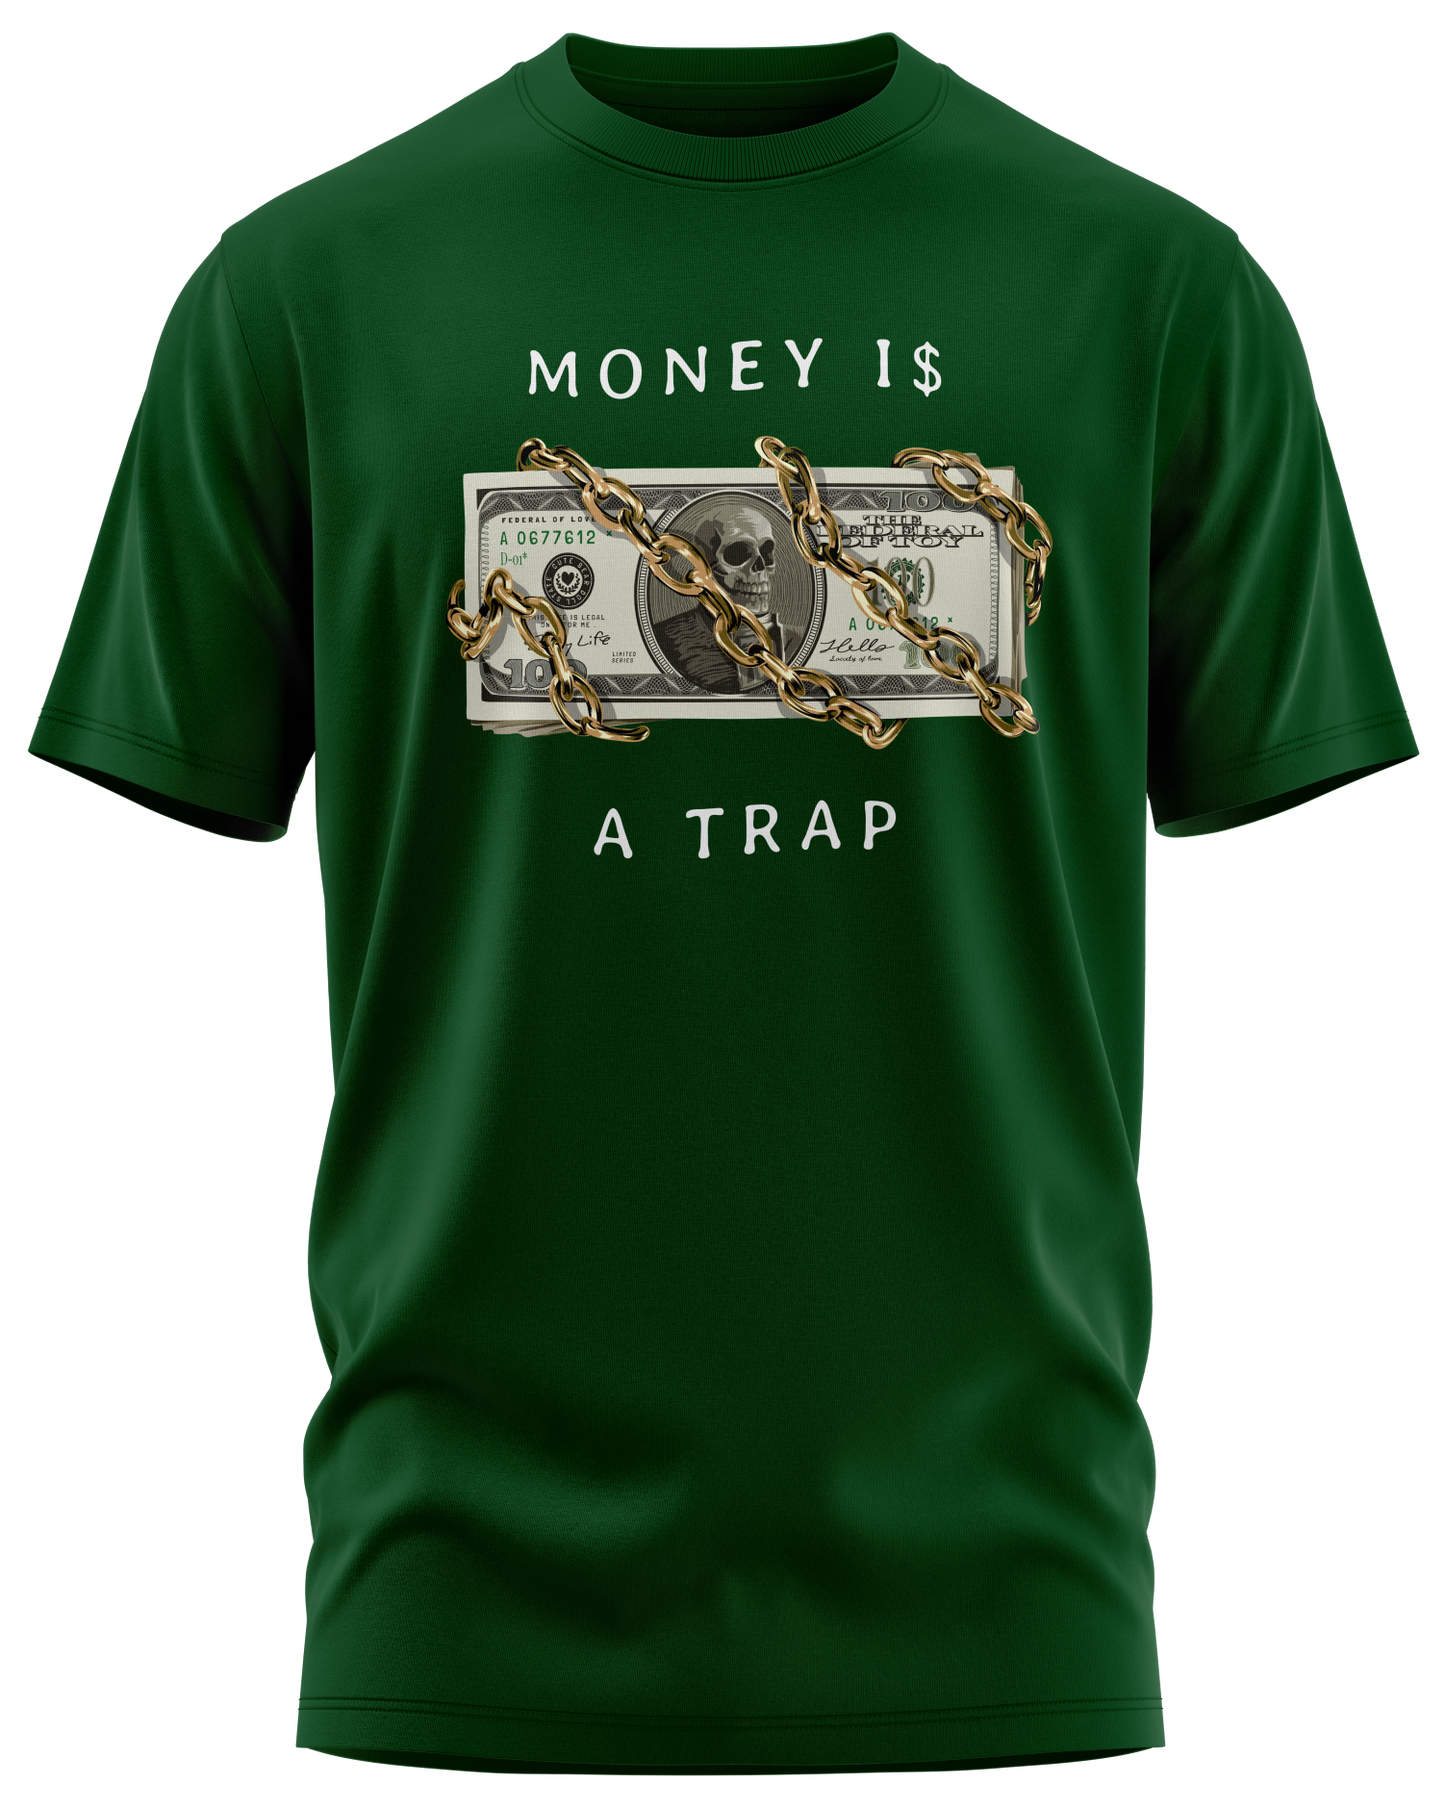 MONEY IS A TRAP